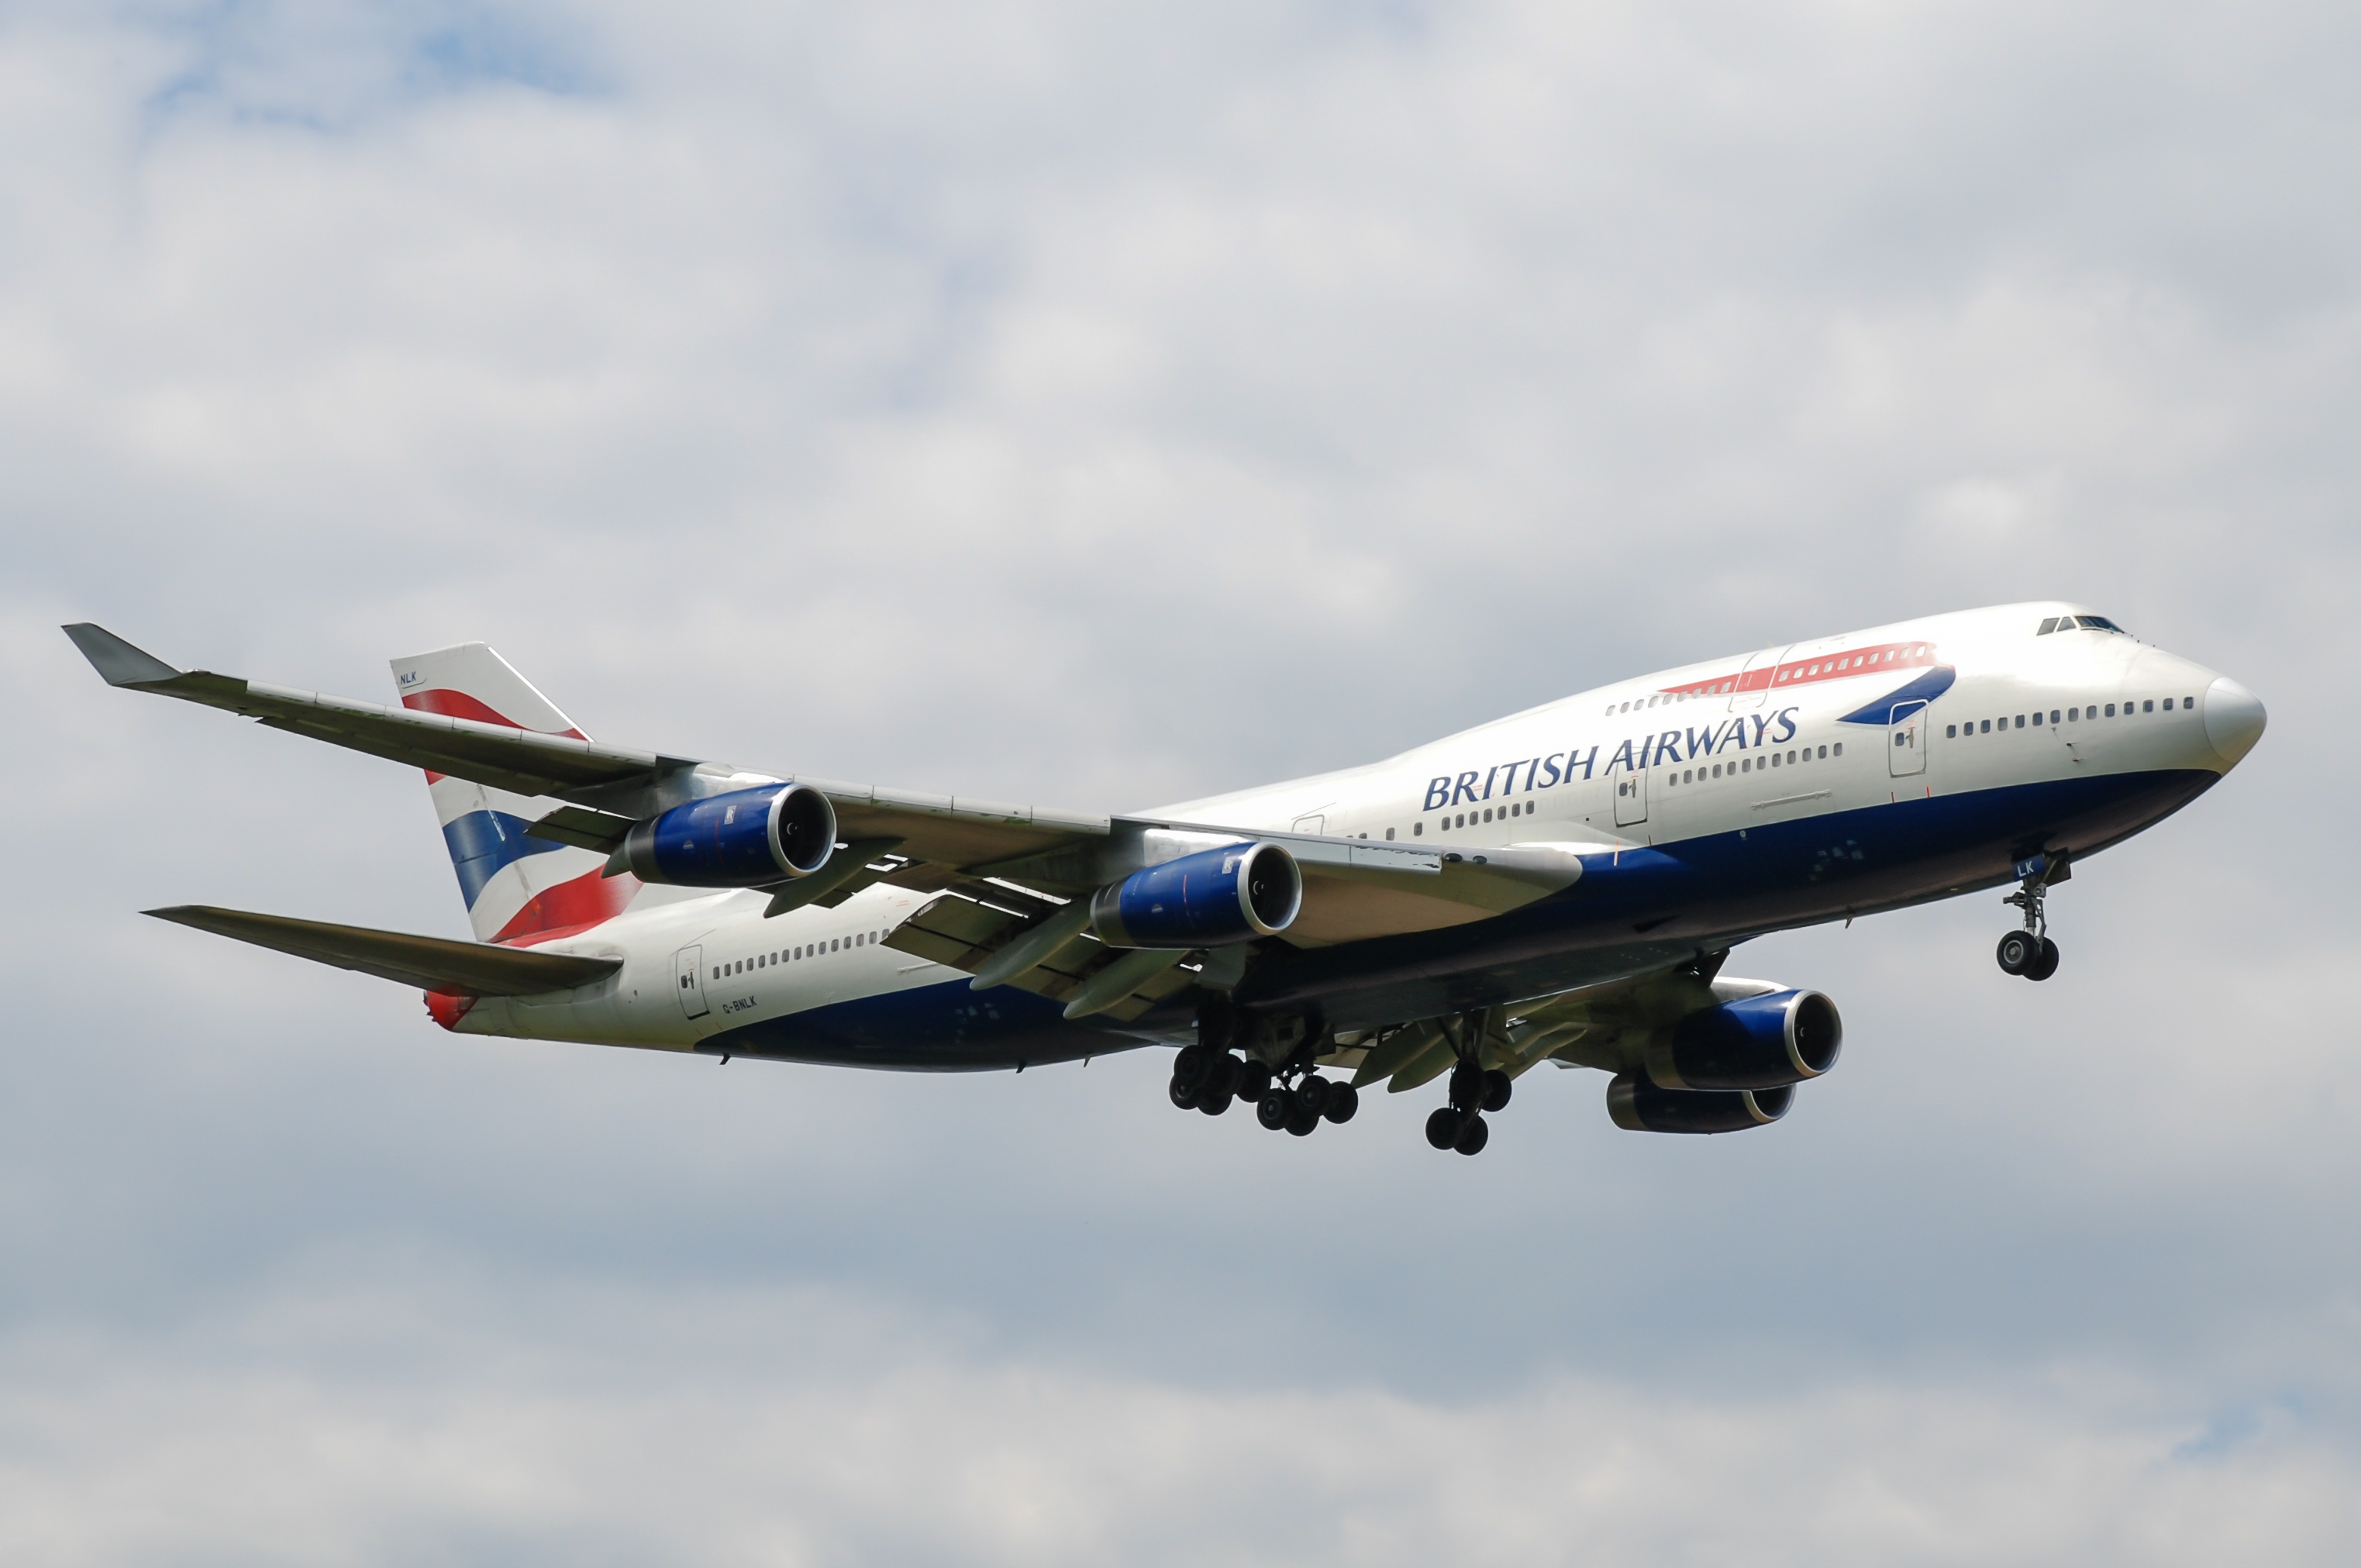 G-BNLK/GBNLK British Airways Boeing 747 Airframe Information - AVSpotters.com